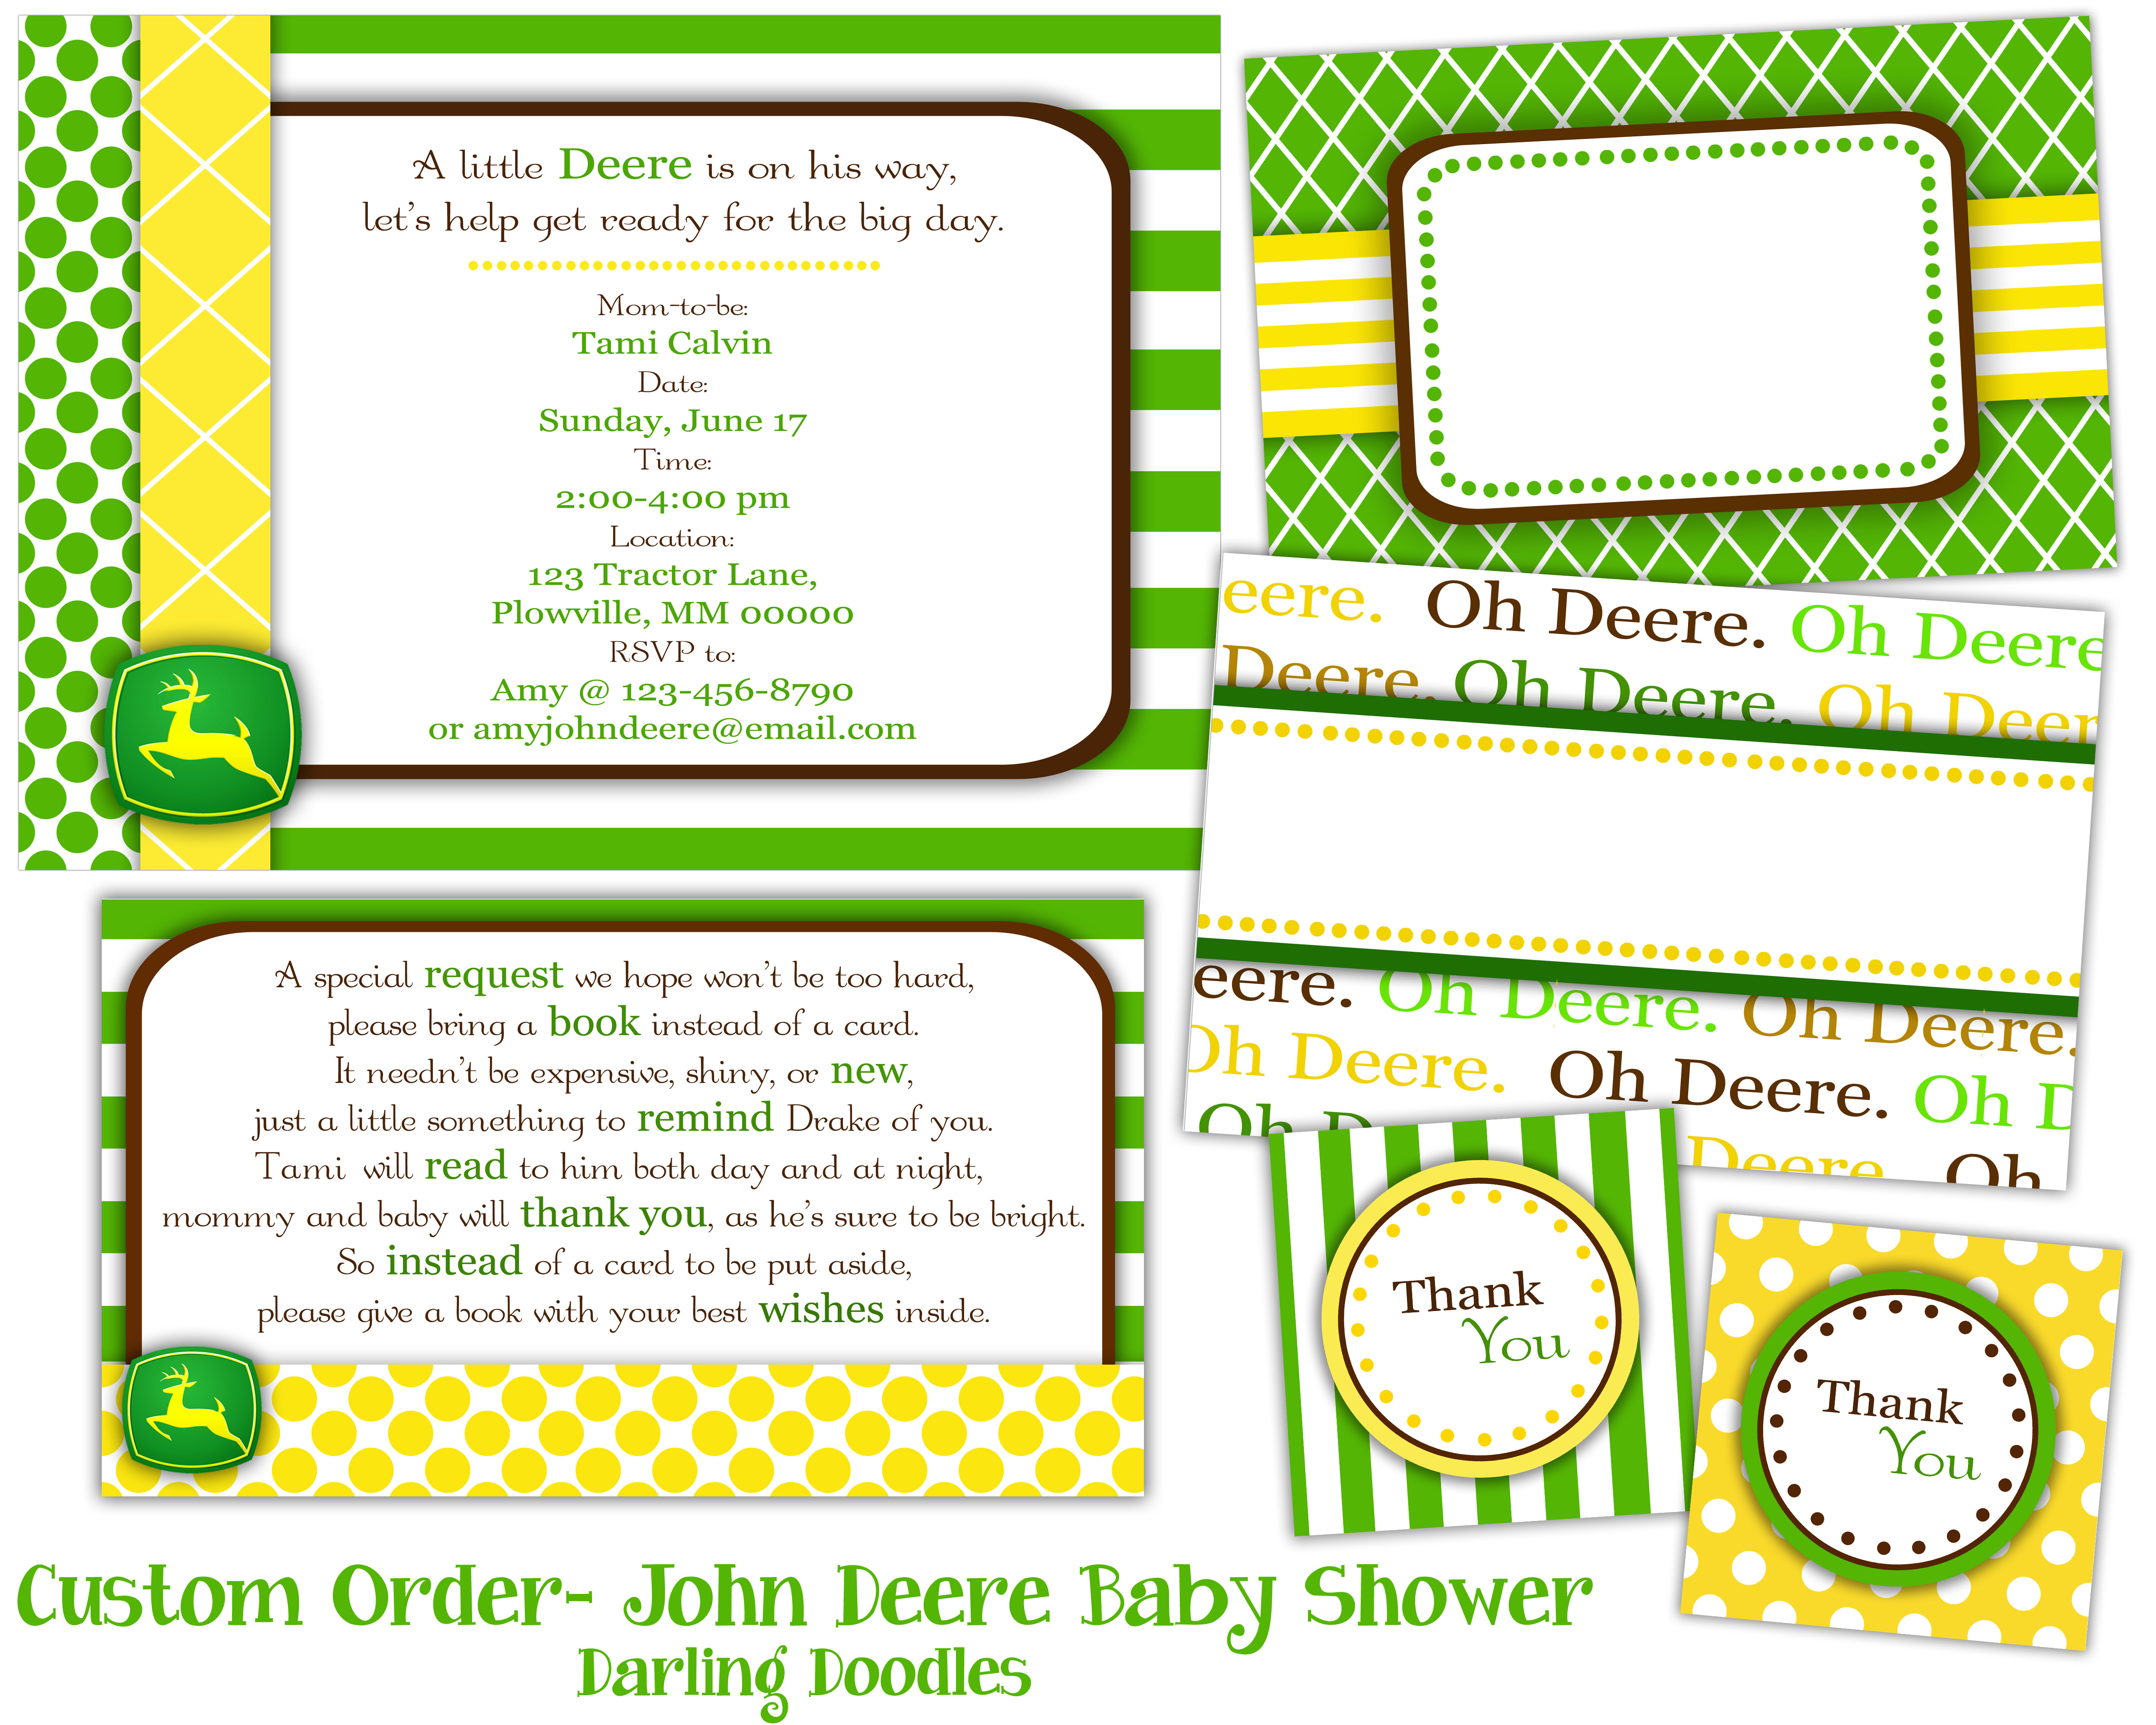 John Deere Baby Shower Invitations For Free | Shilohmidwifery - Free Printable John Deere Baby Shower Invitations